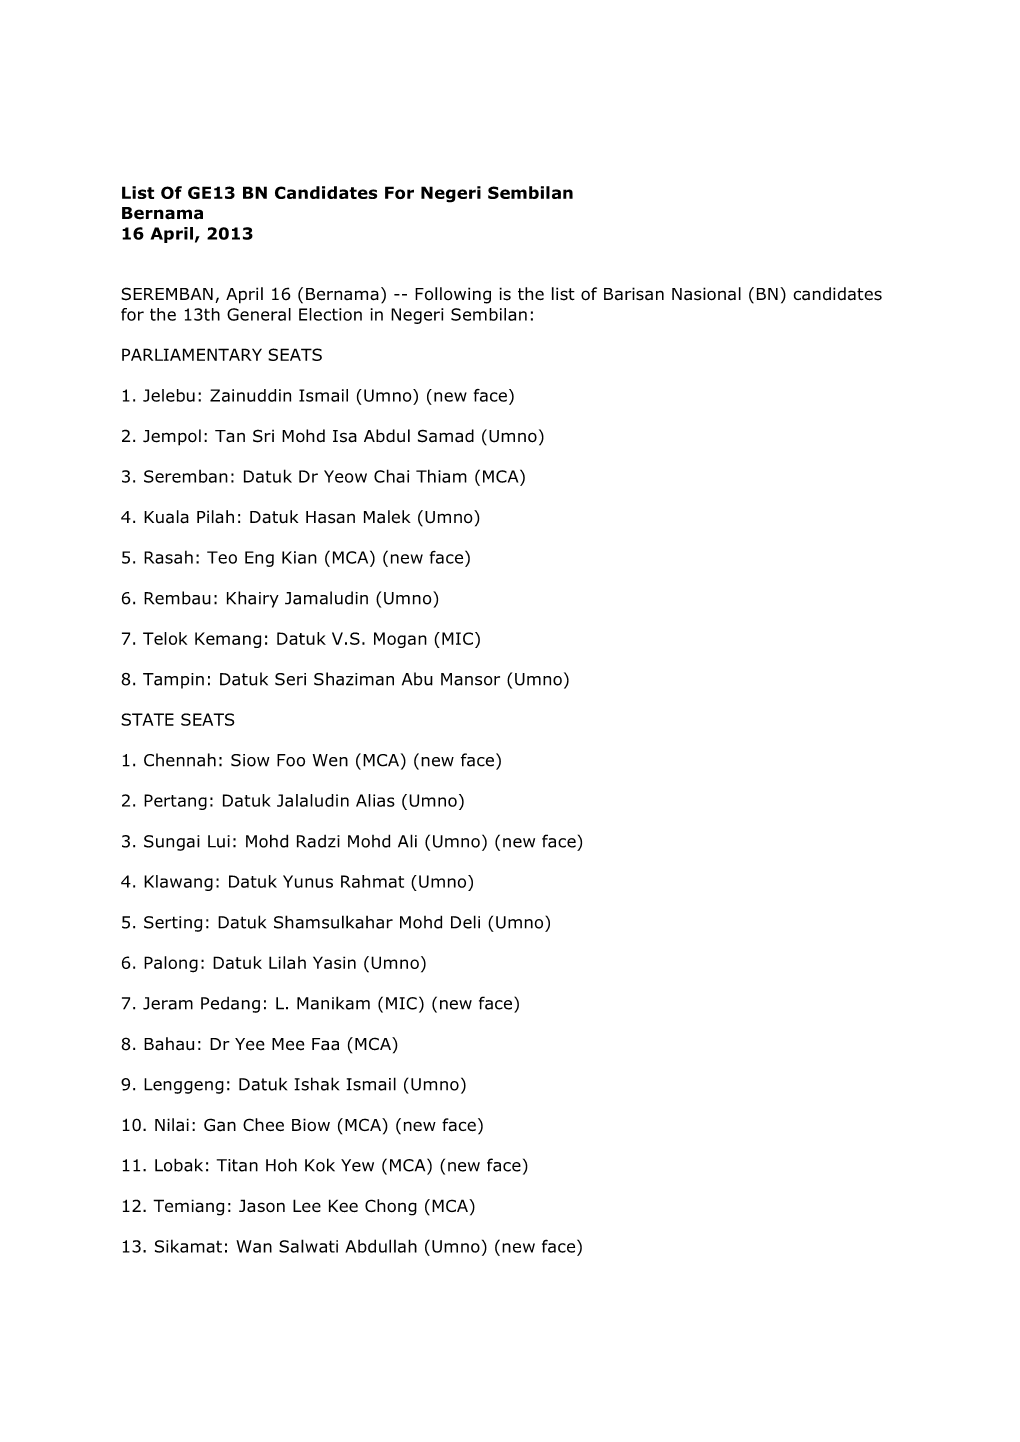 List of GE13 BN Candidates for Negeri Sembilan Bernama 16 April, 2013